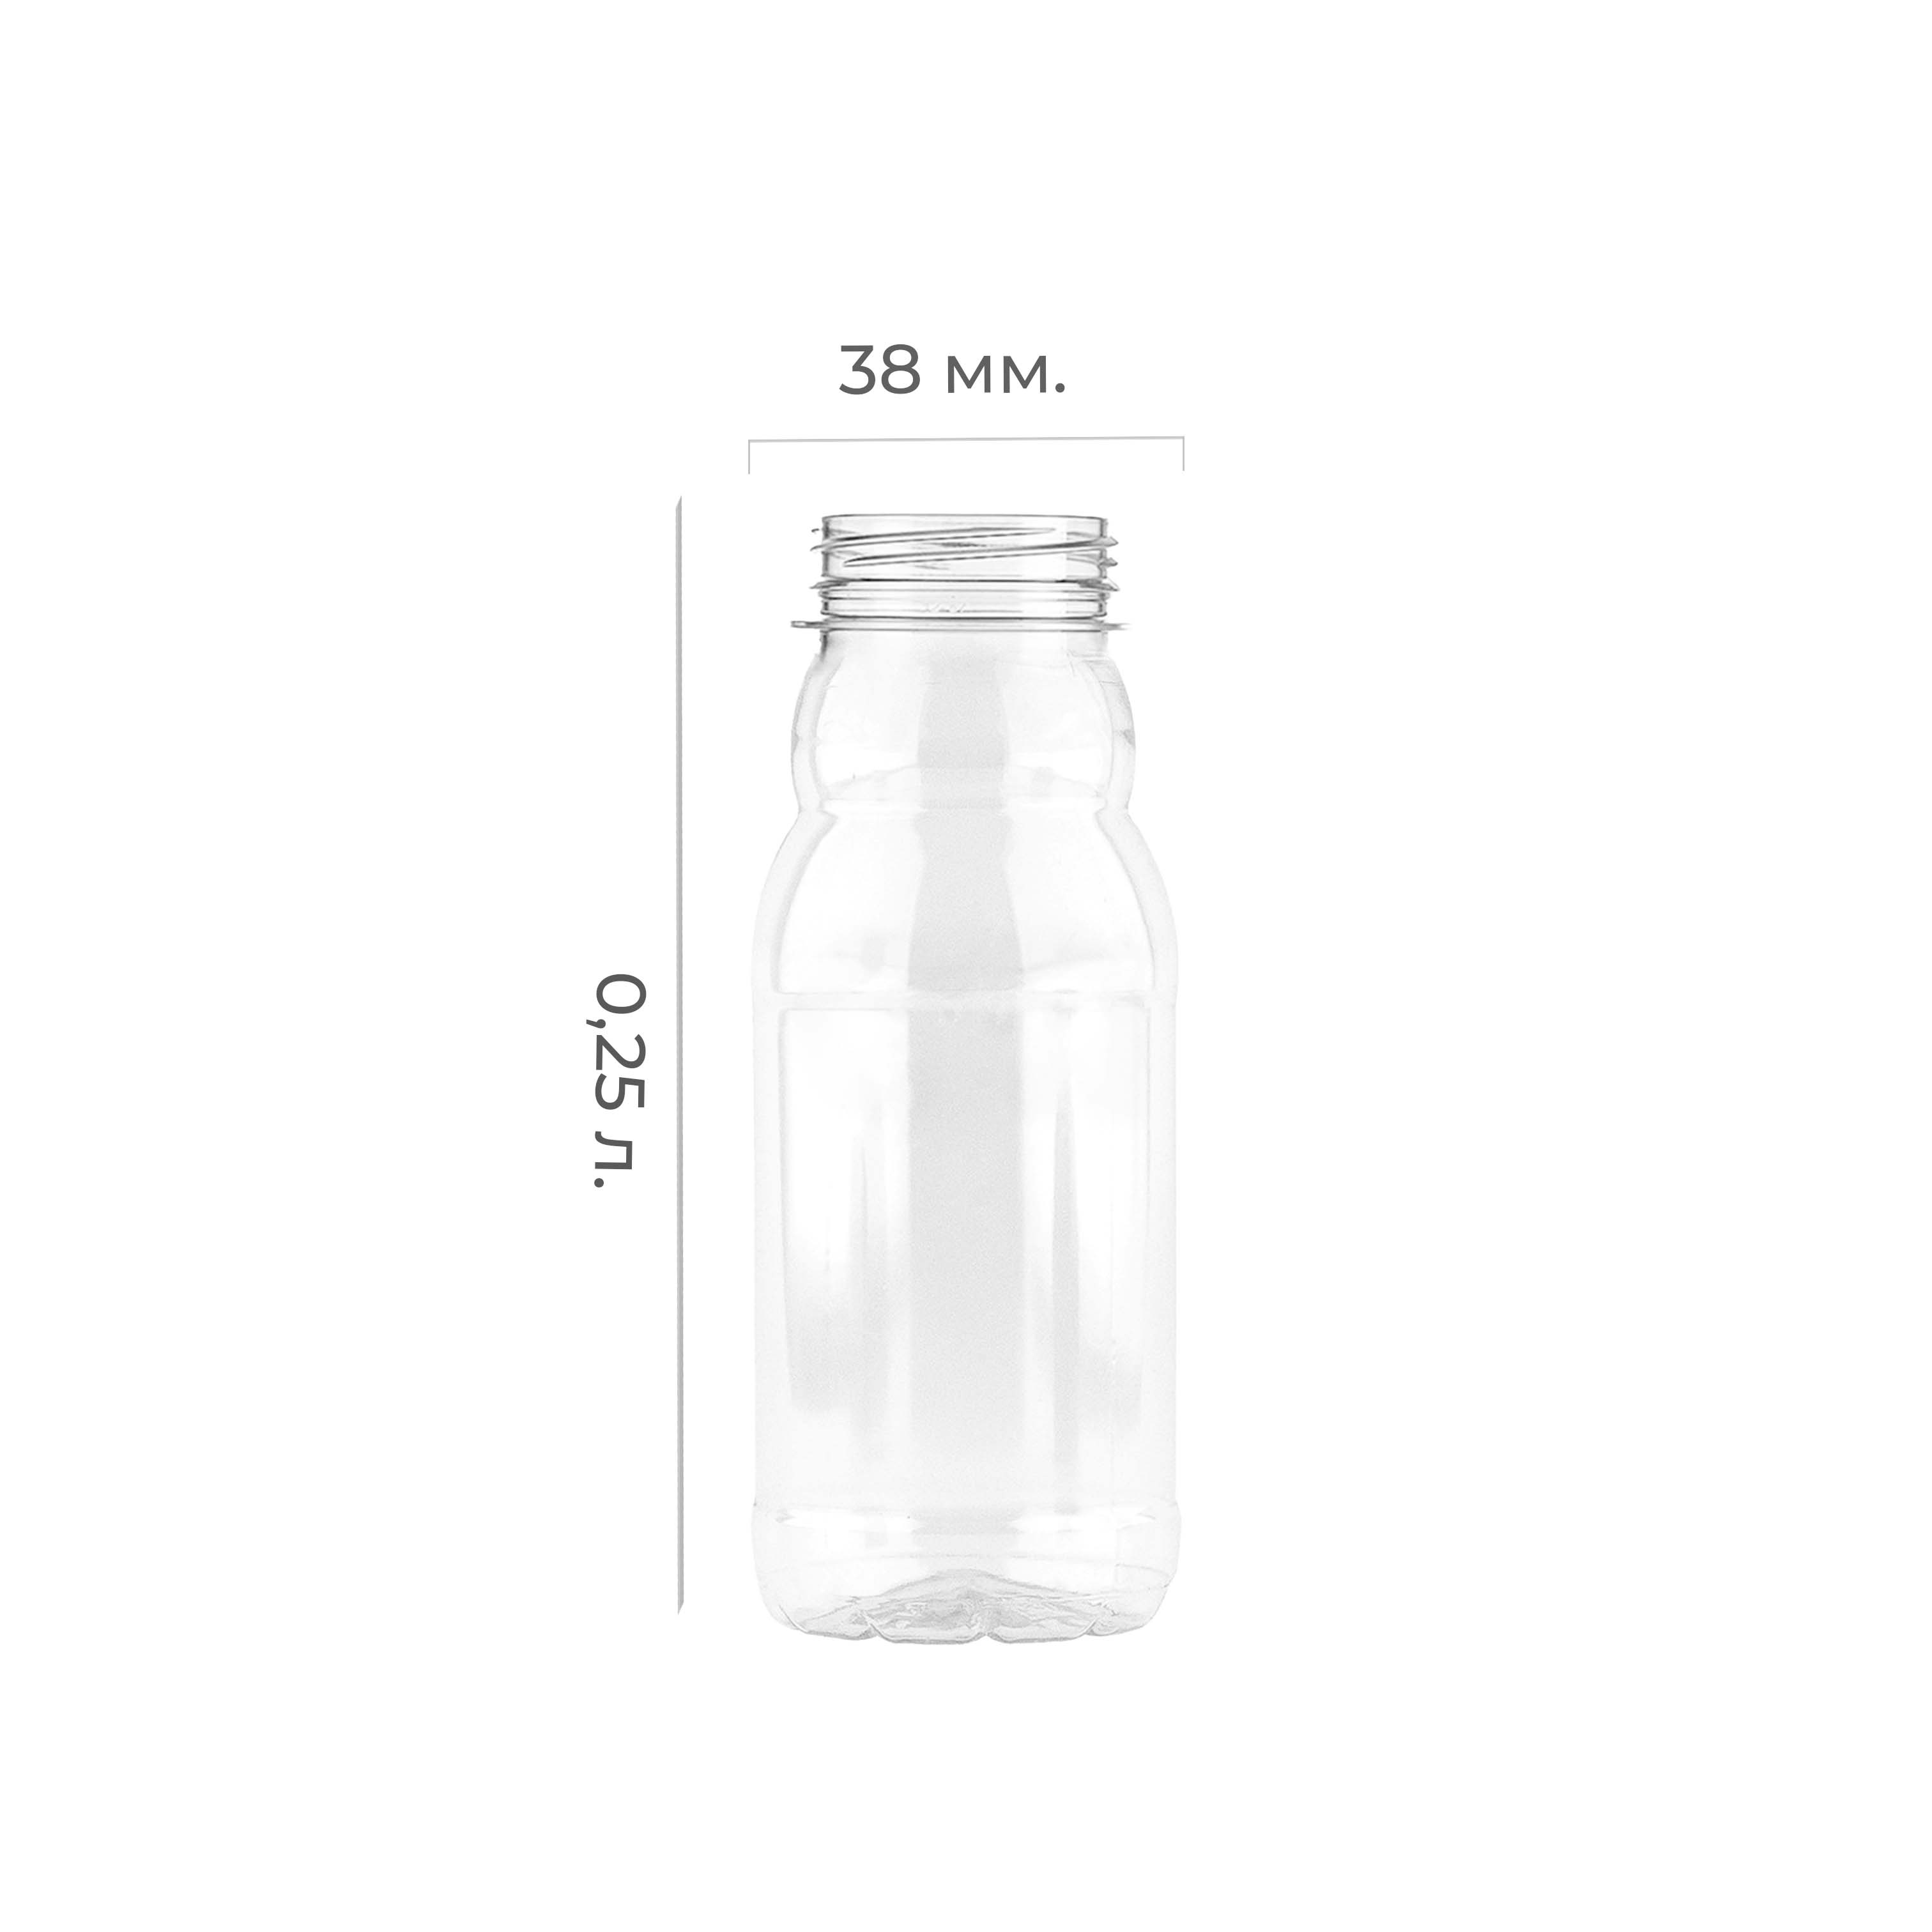 Бутылка ПЭТ 0,25л горло 38мм (широкое) прозрачная БЕЗ крышки (209)